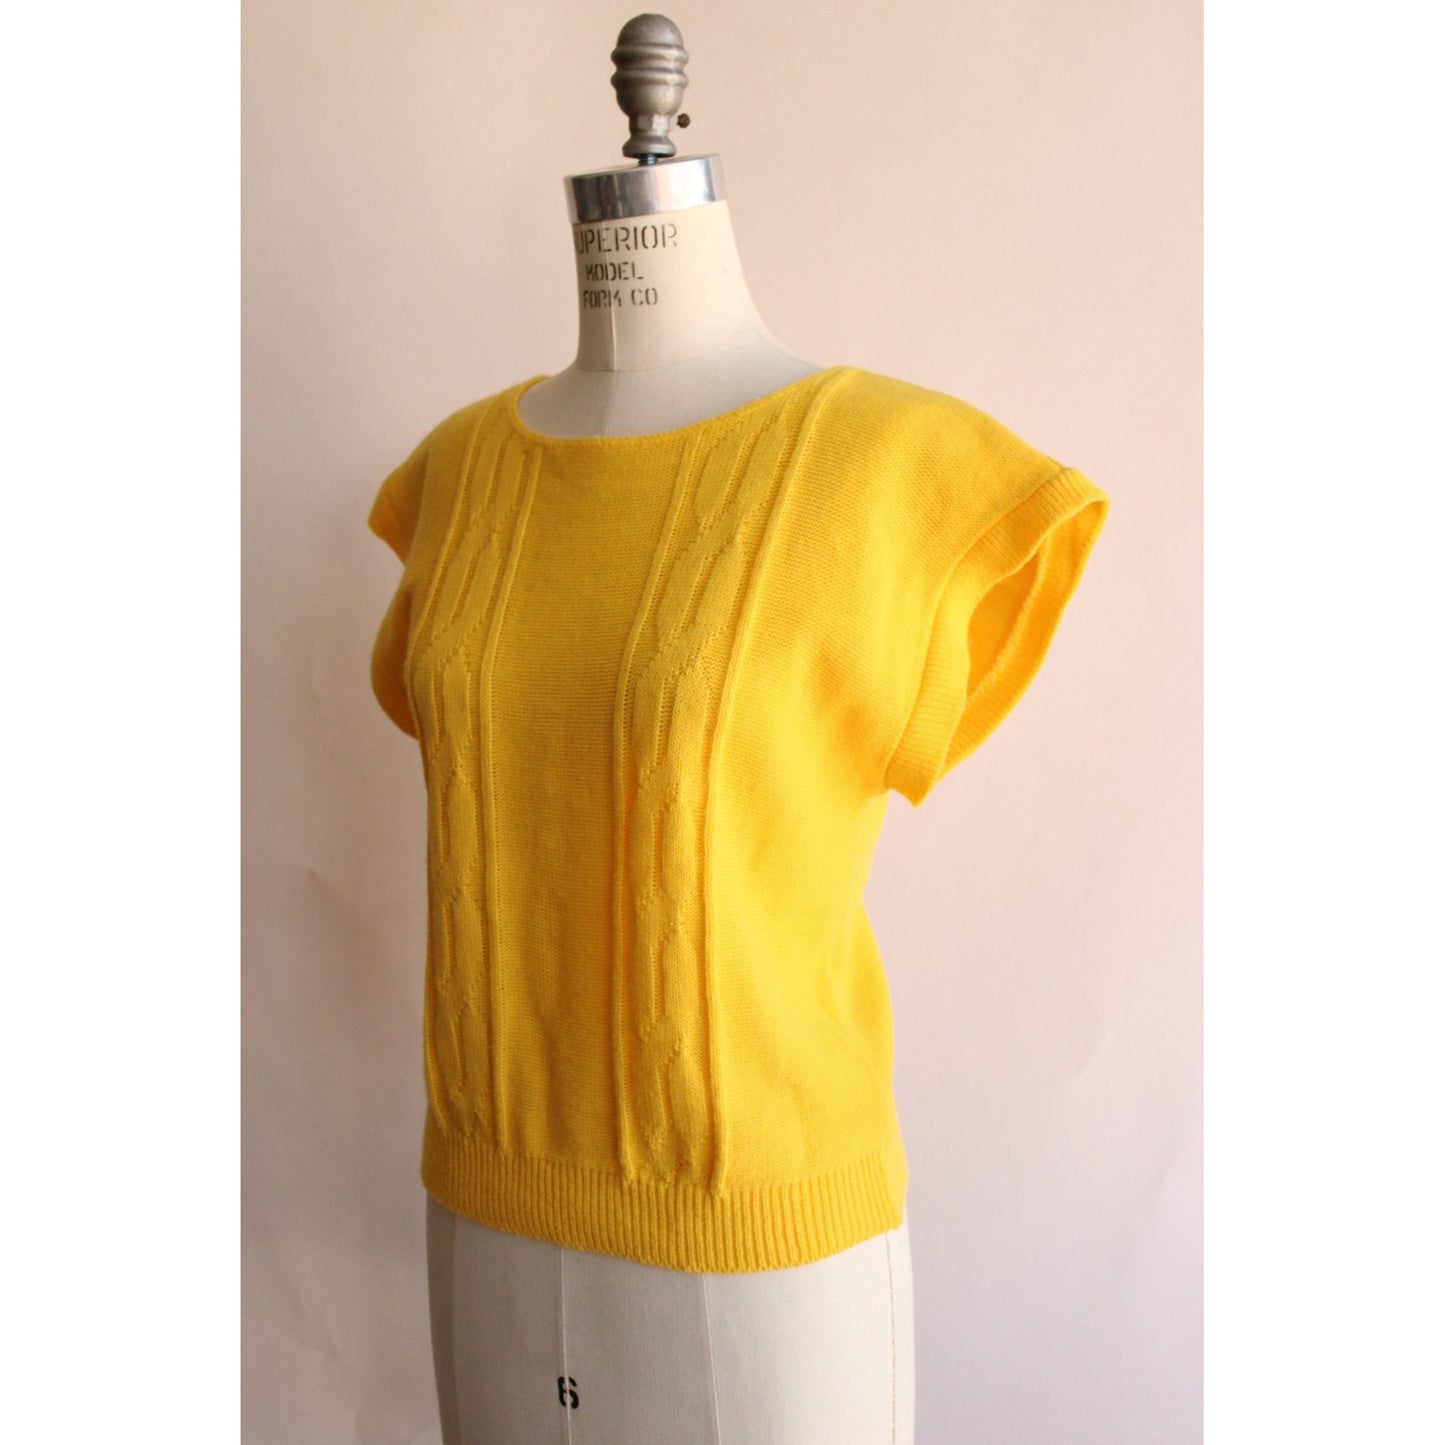 Vintage 1980s Yellow Cap Sleeve Sweater